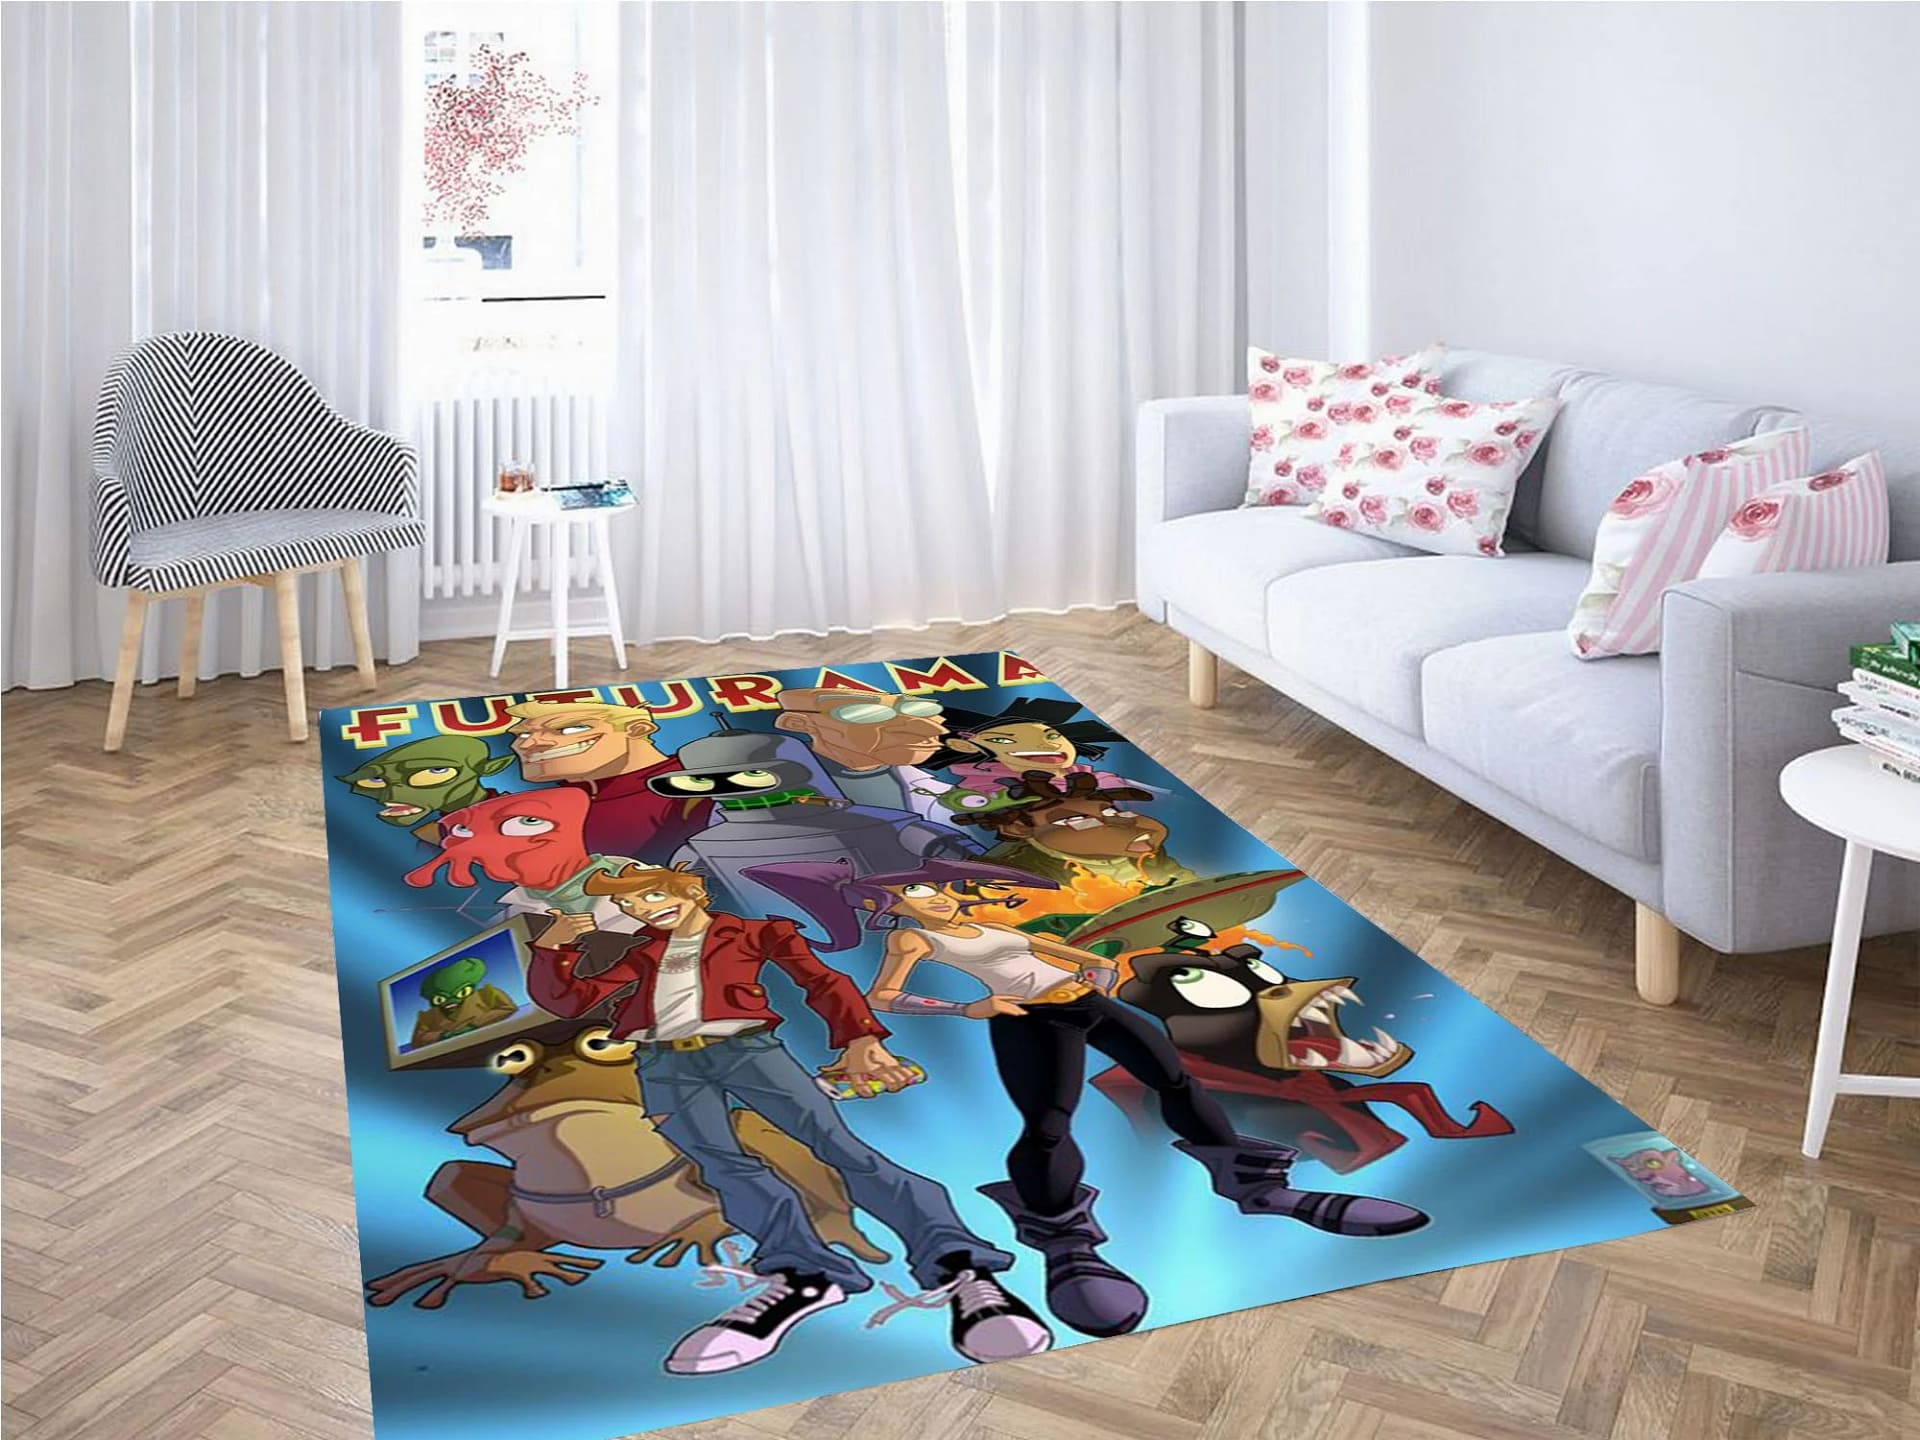 Futurama Art Style Carpet Rug